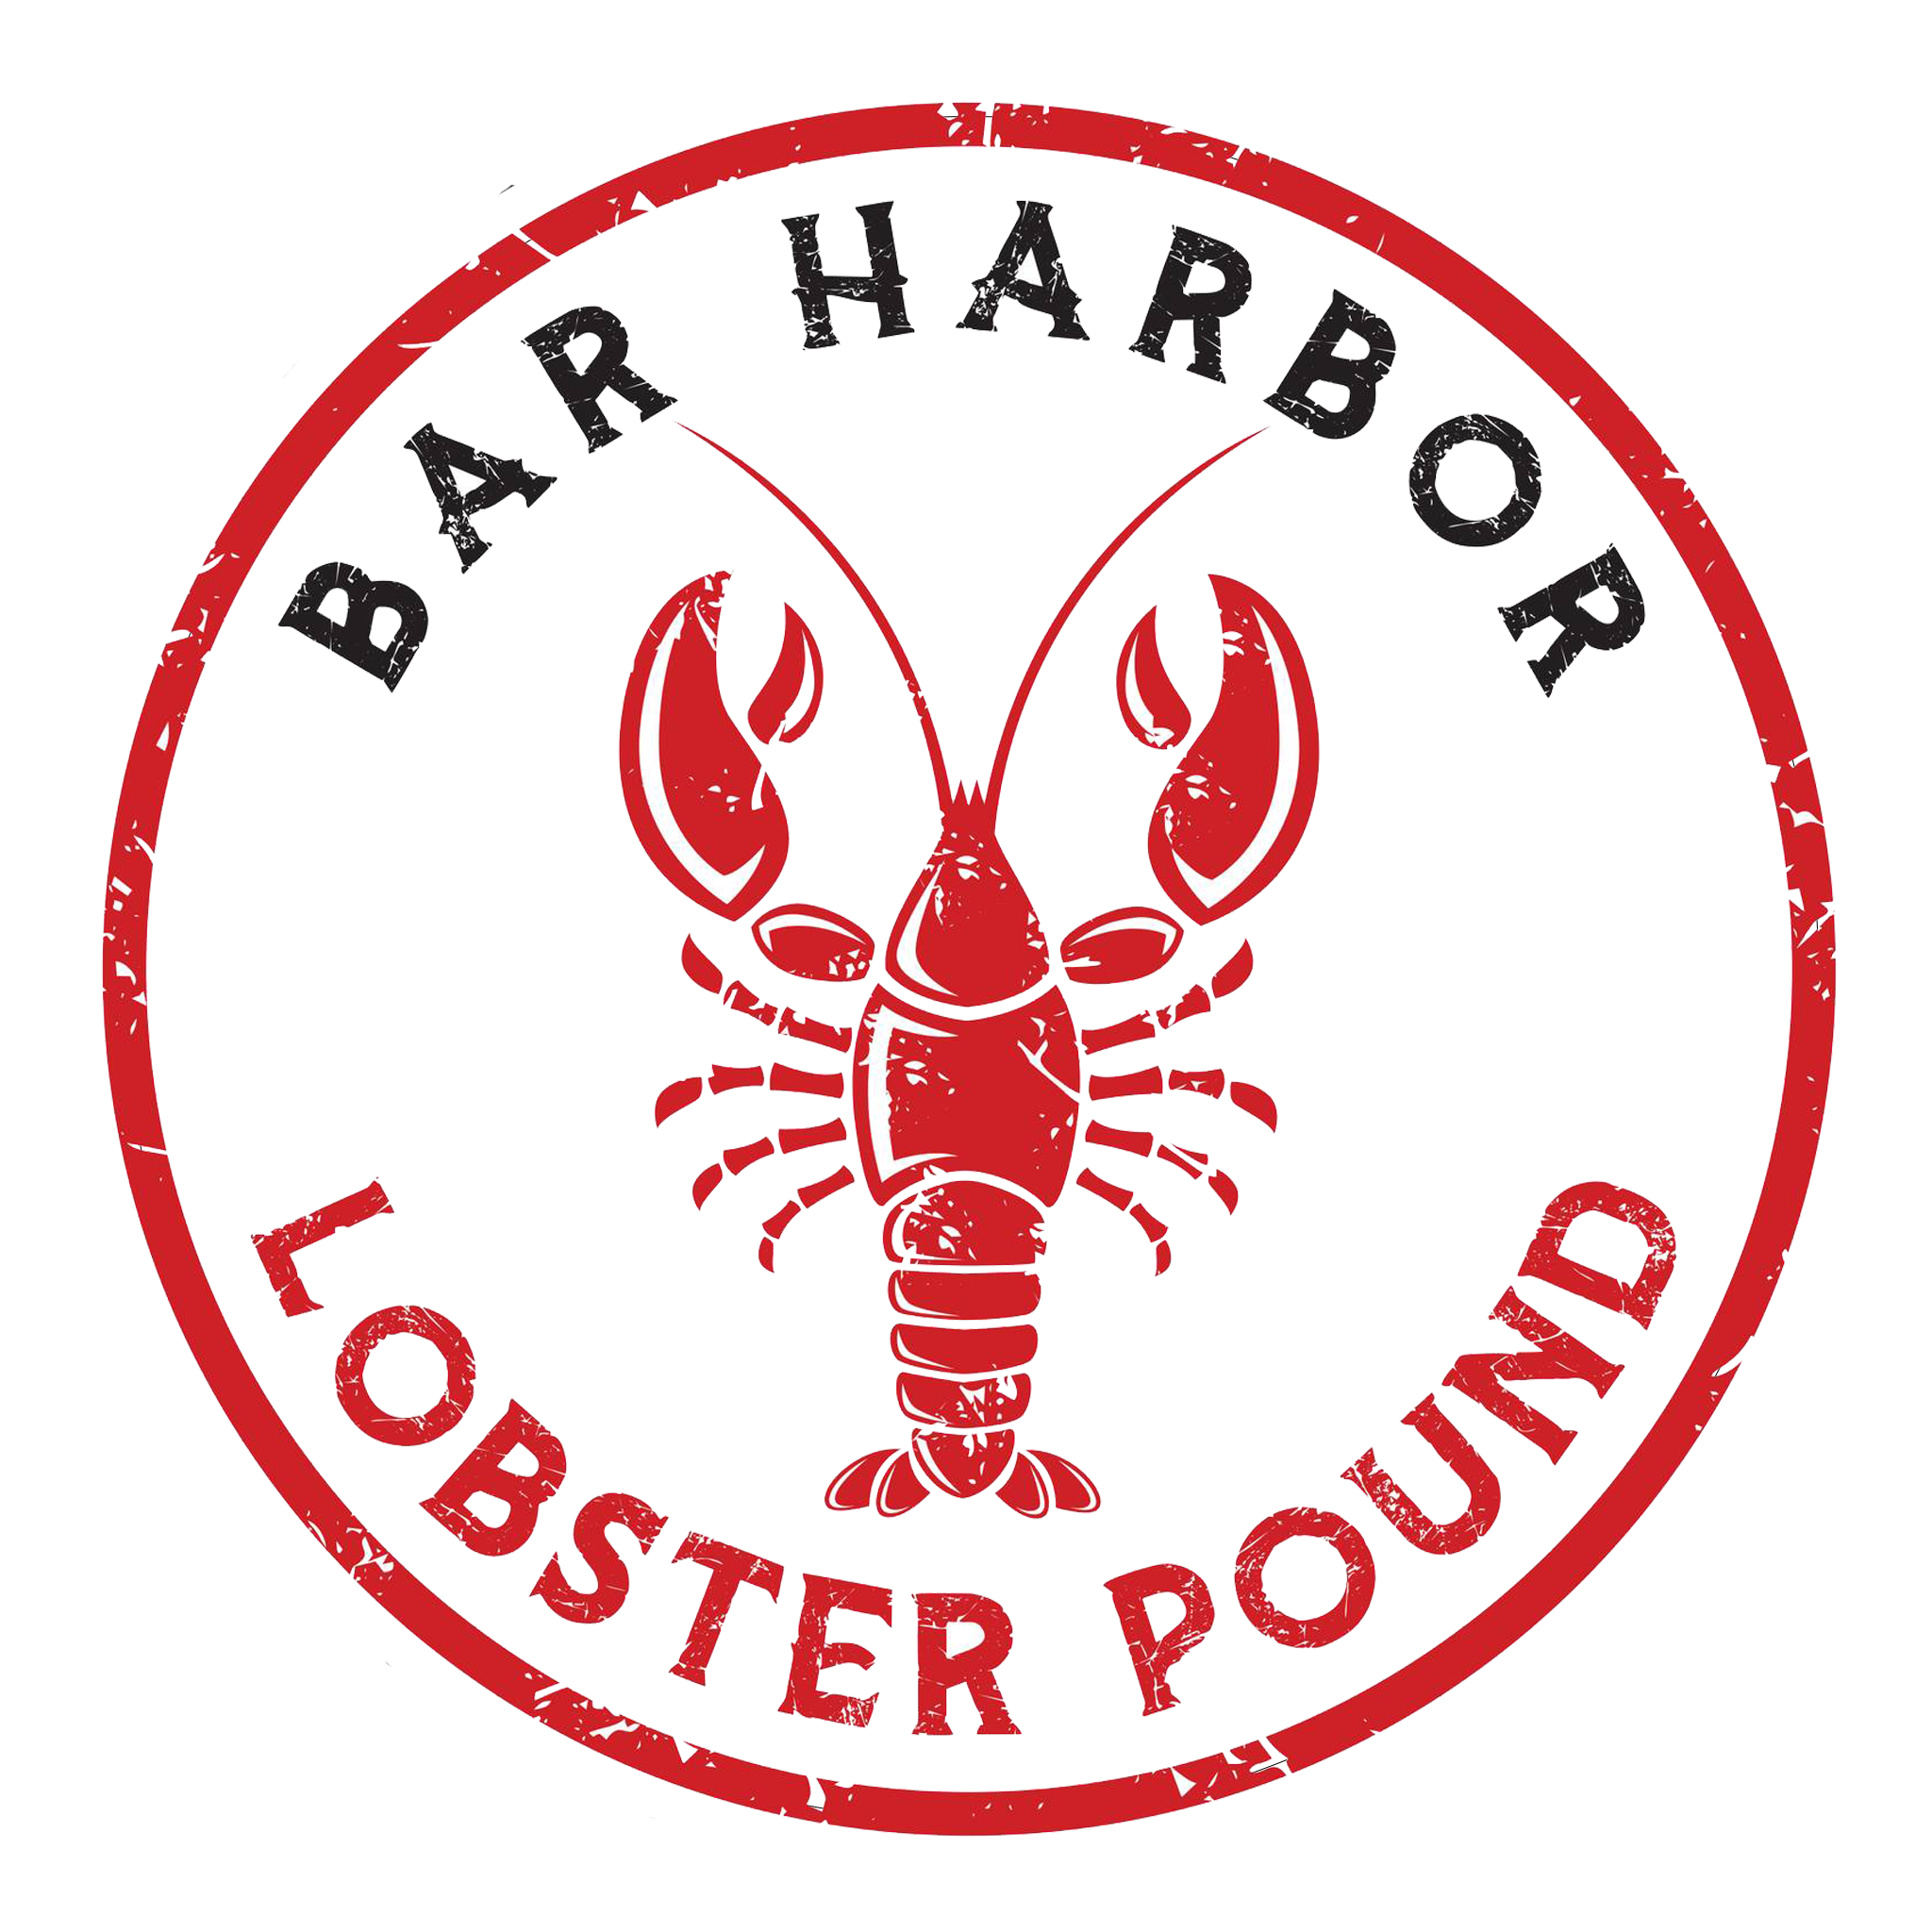 Bar Harbor Lobster Pound